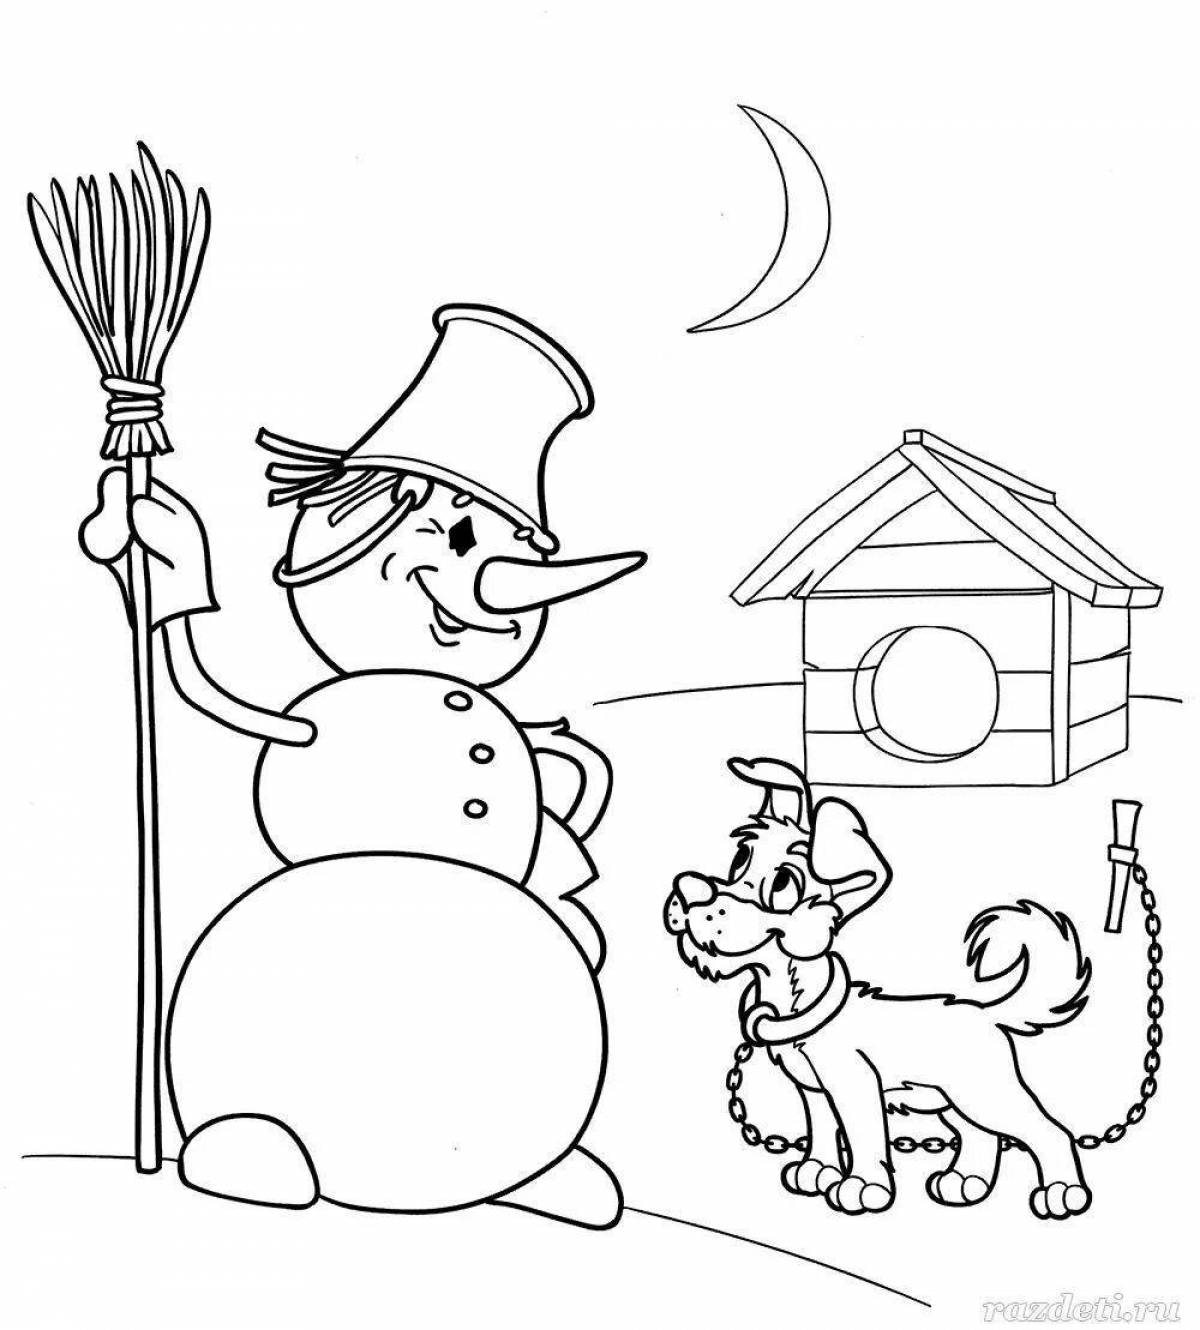 Happy coloring page снеговик почтальон